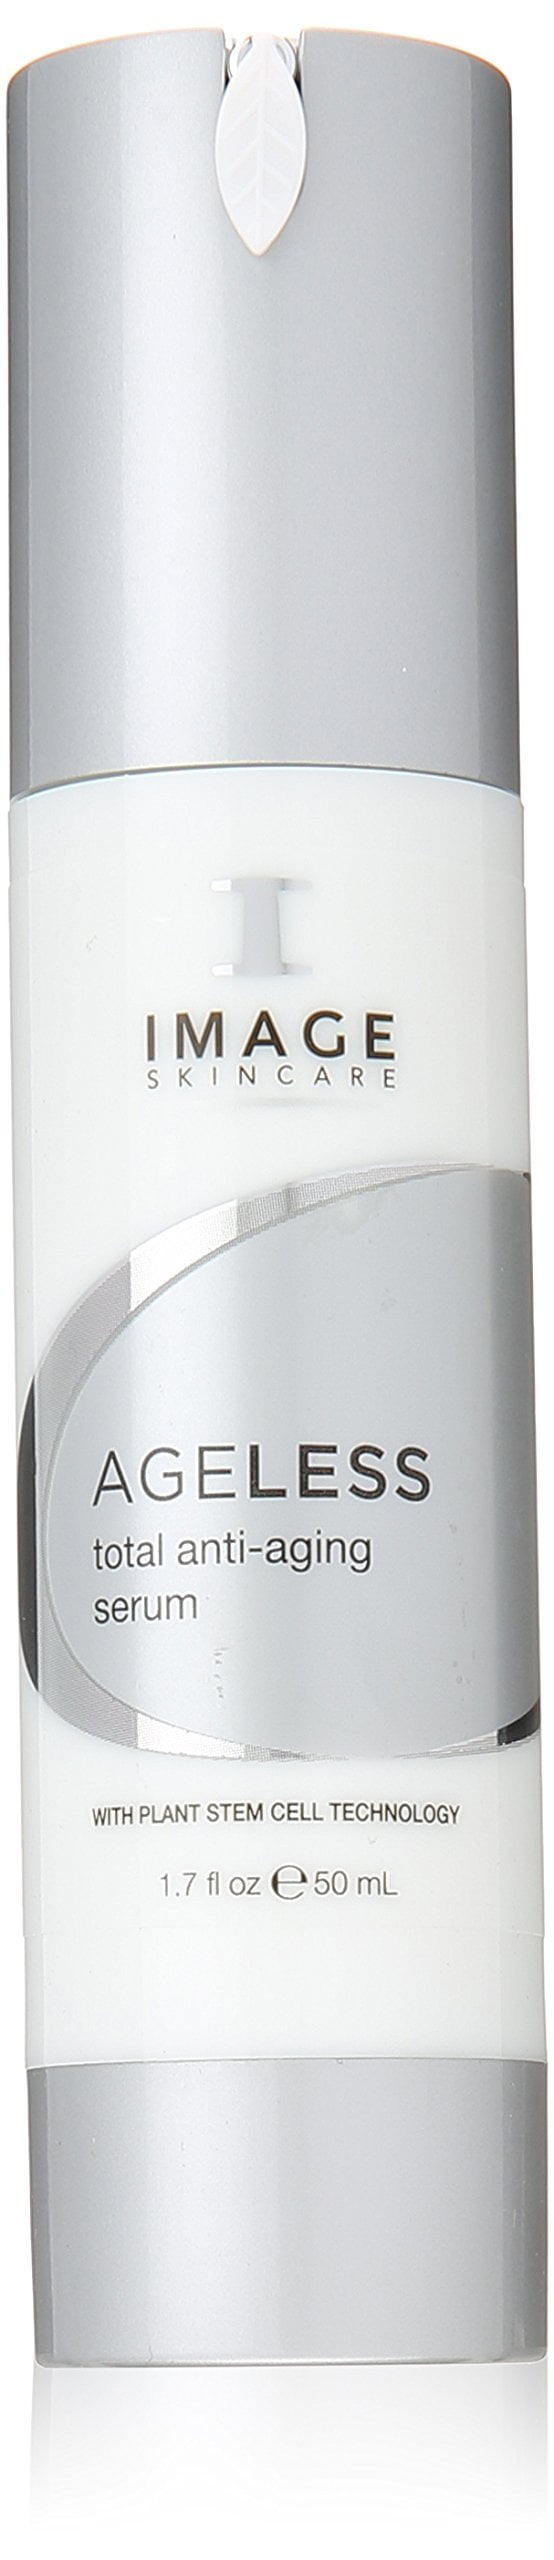 ageless anti aging szérum